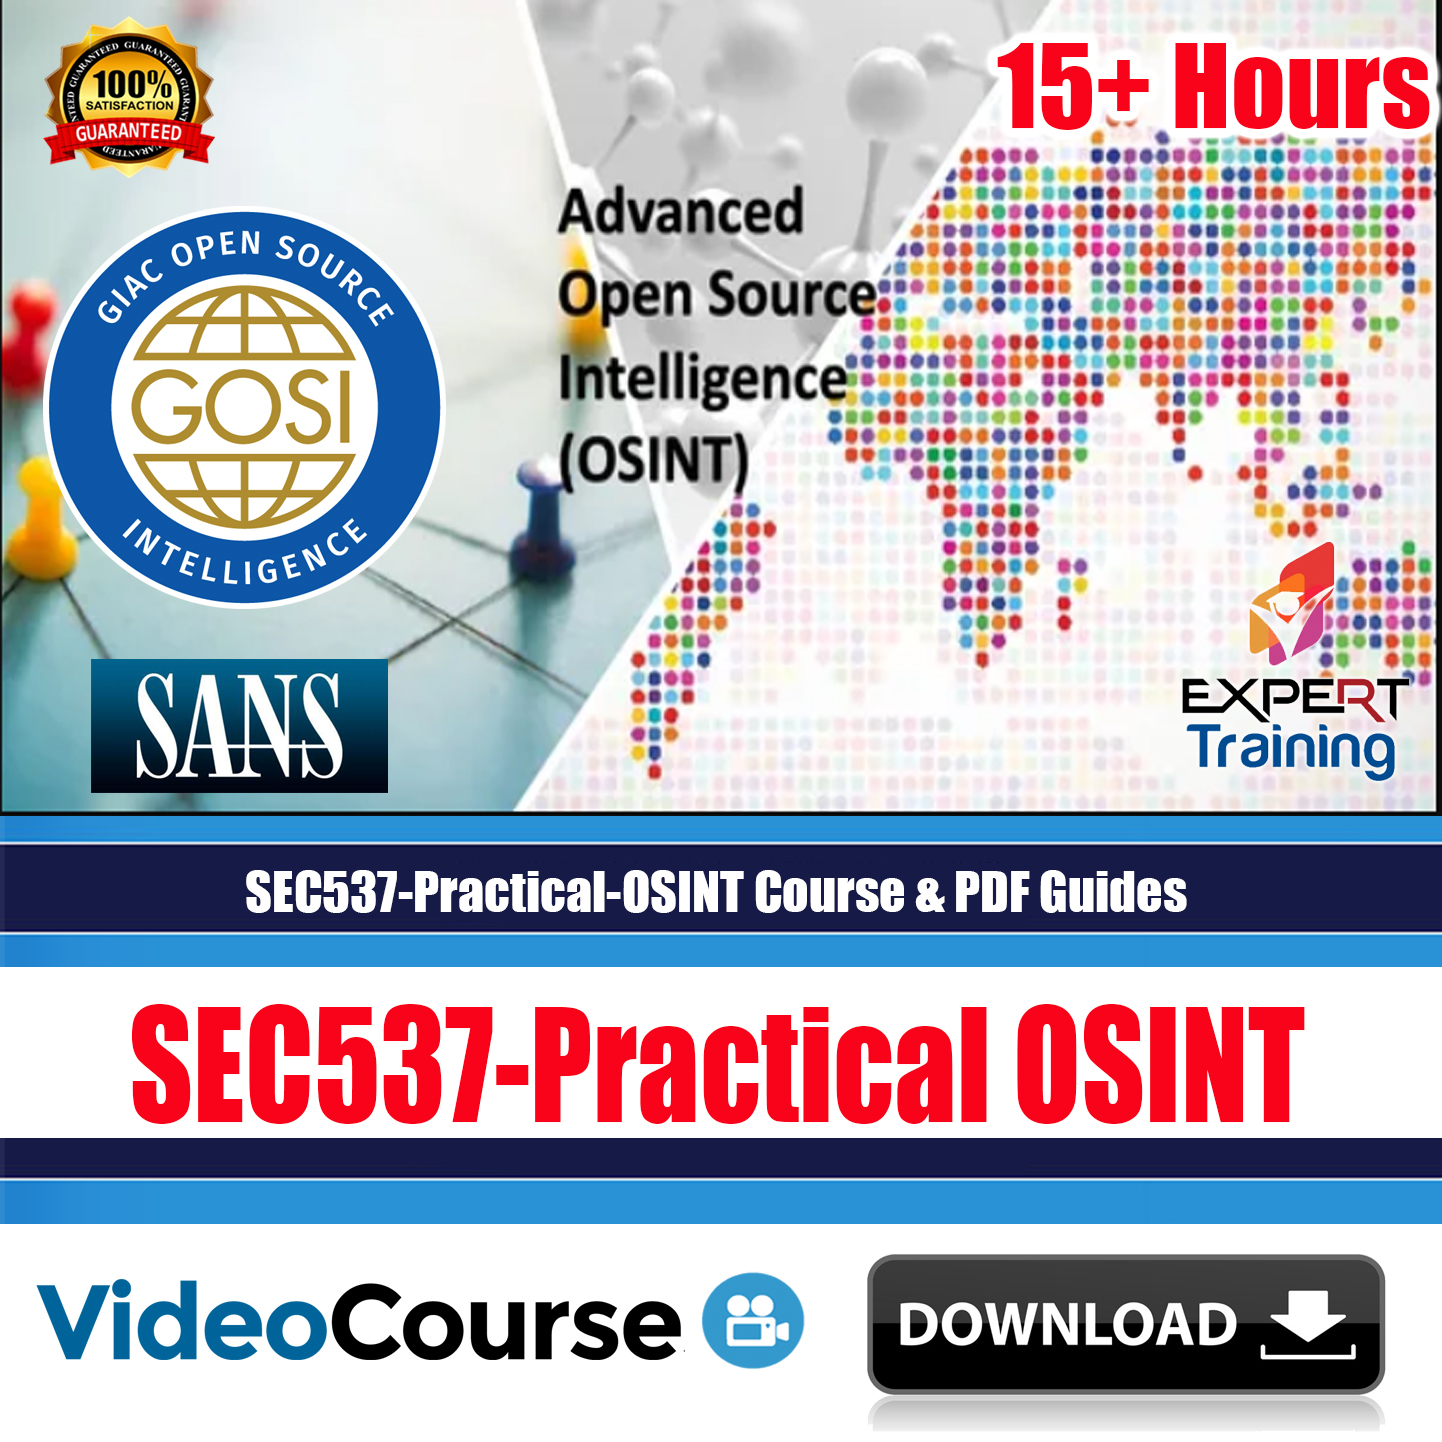 SEC537 Practical Open-Source Intelligence (OSINT) Video Course & PDF Guides